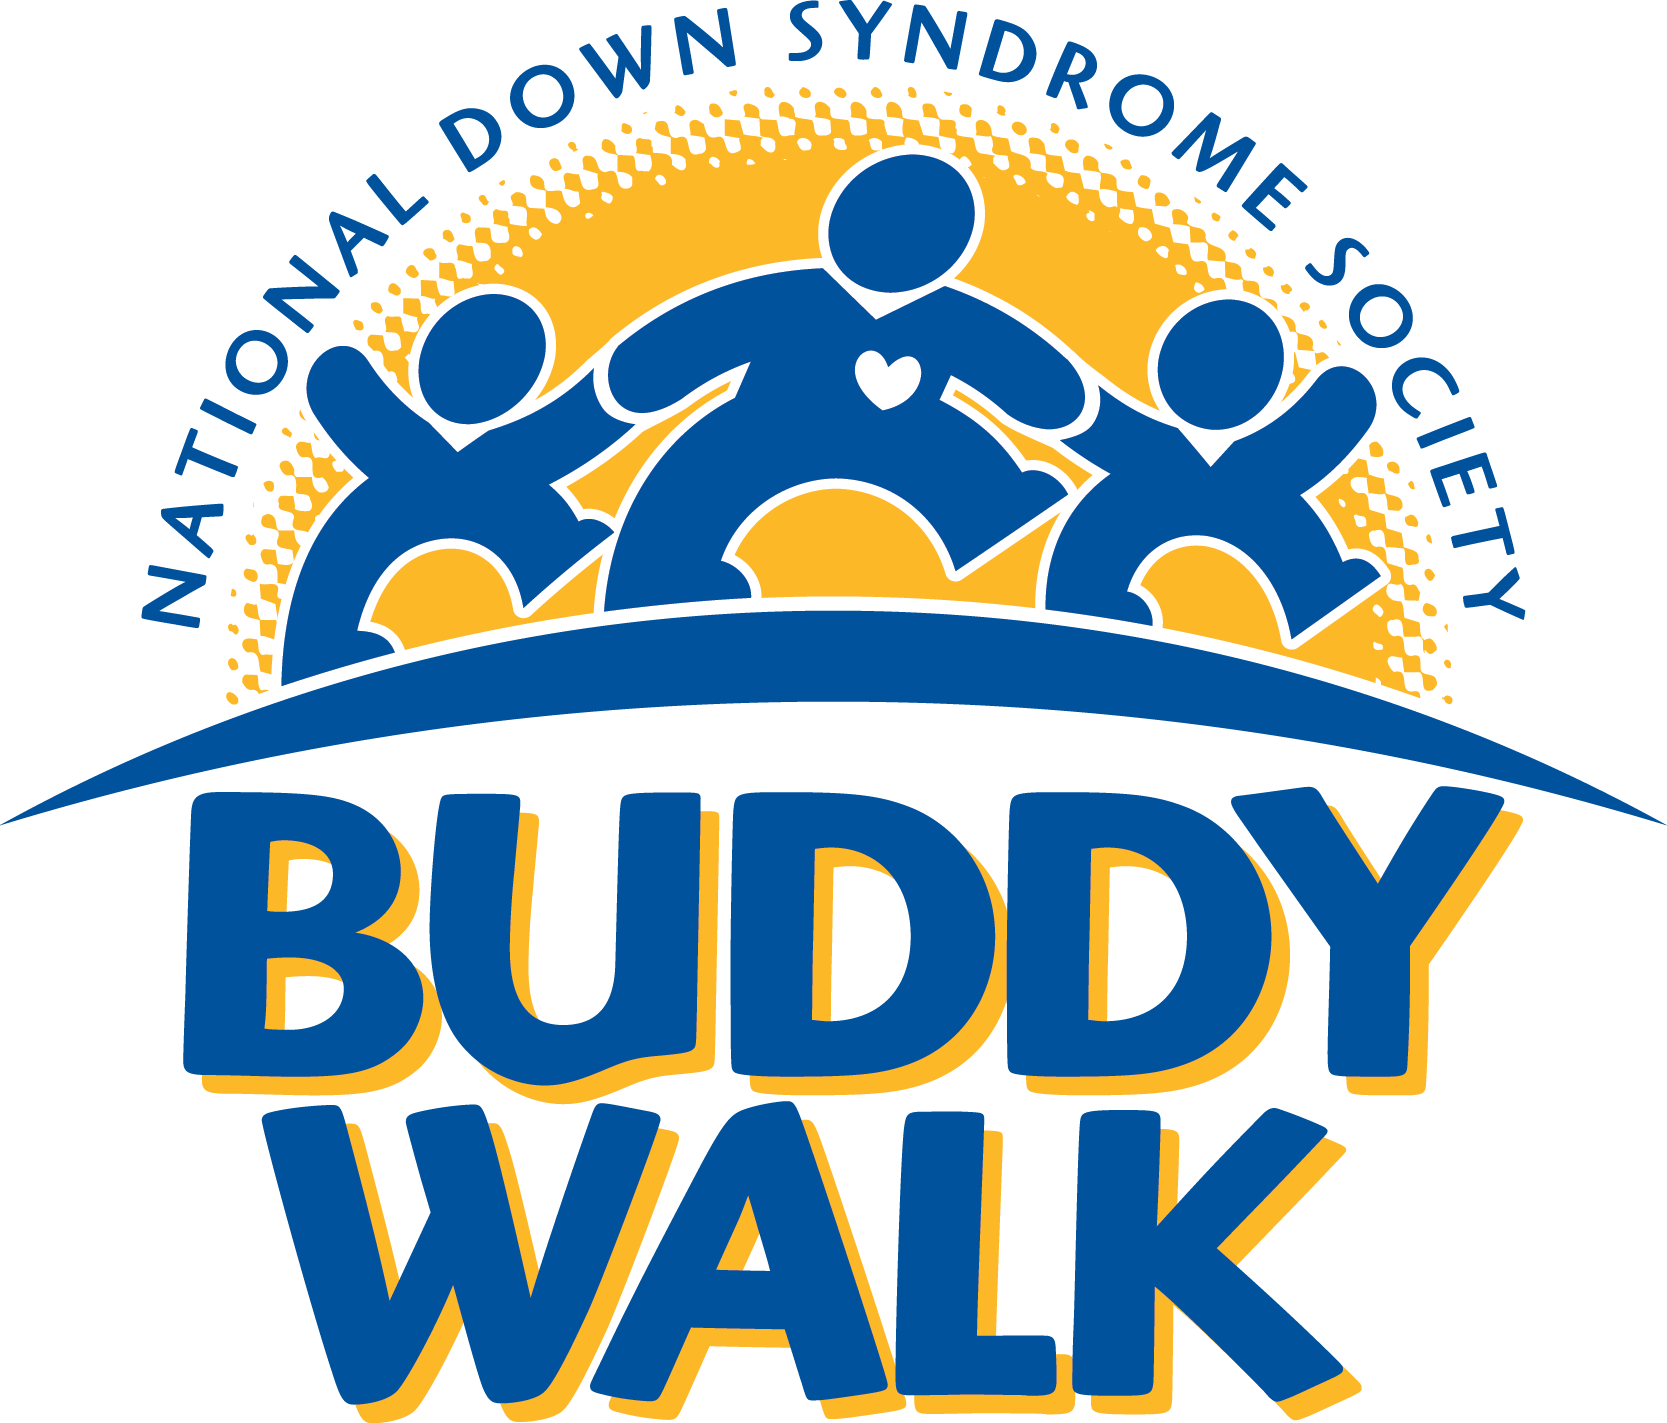 Buddy Walk - Down Syndrome Buddy Walk (1667x1423), Png Download